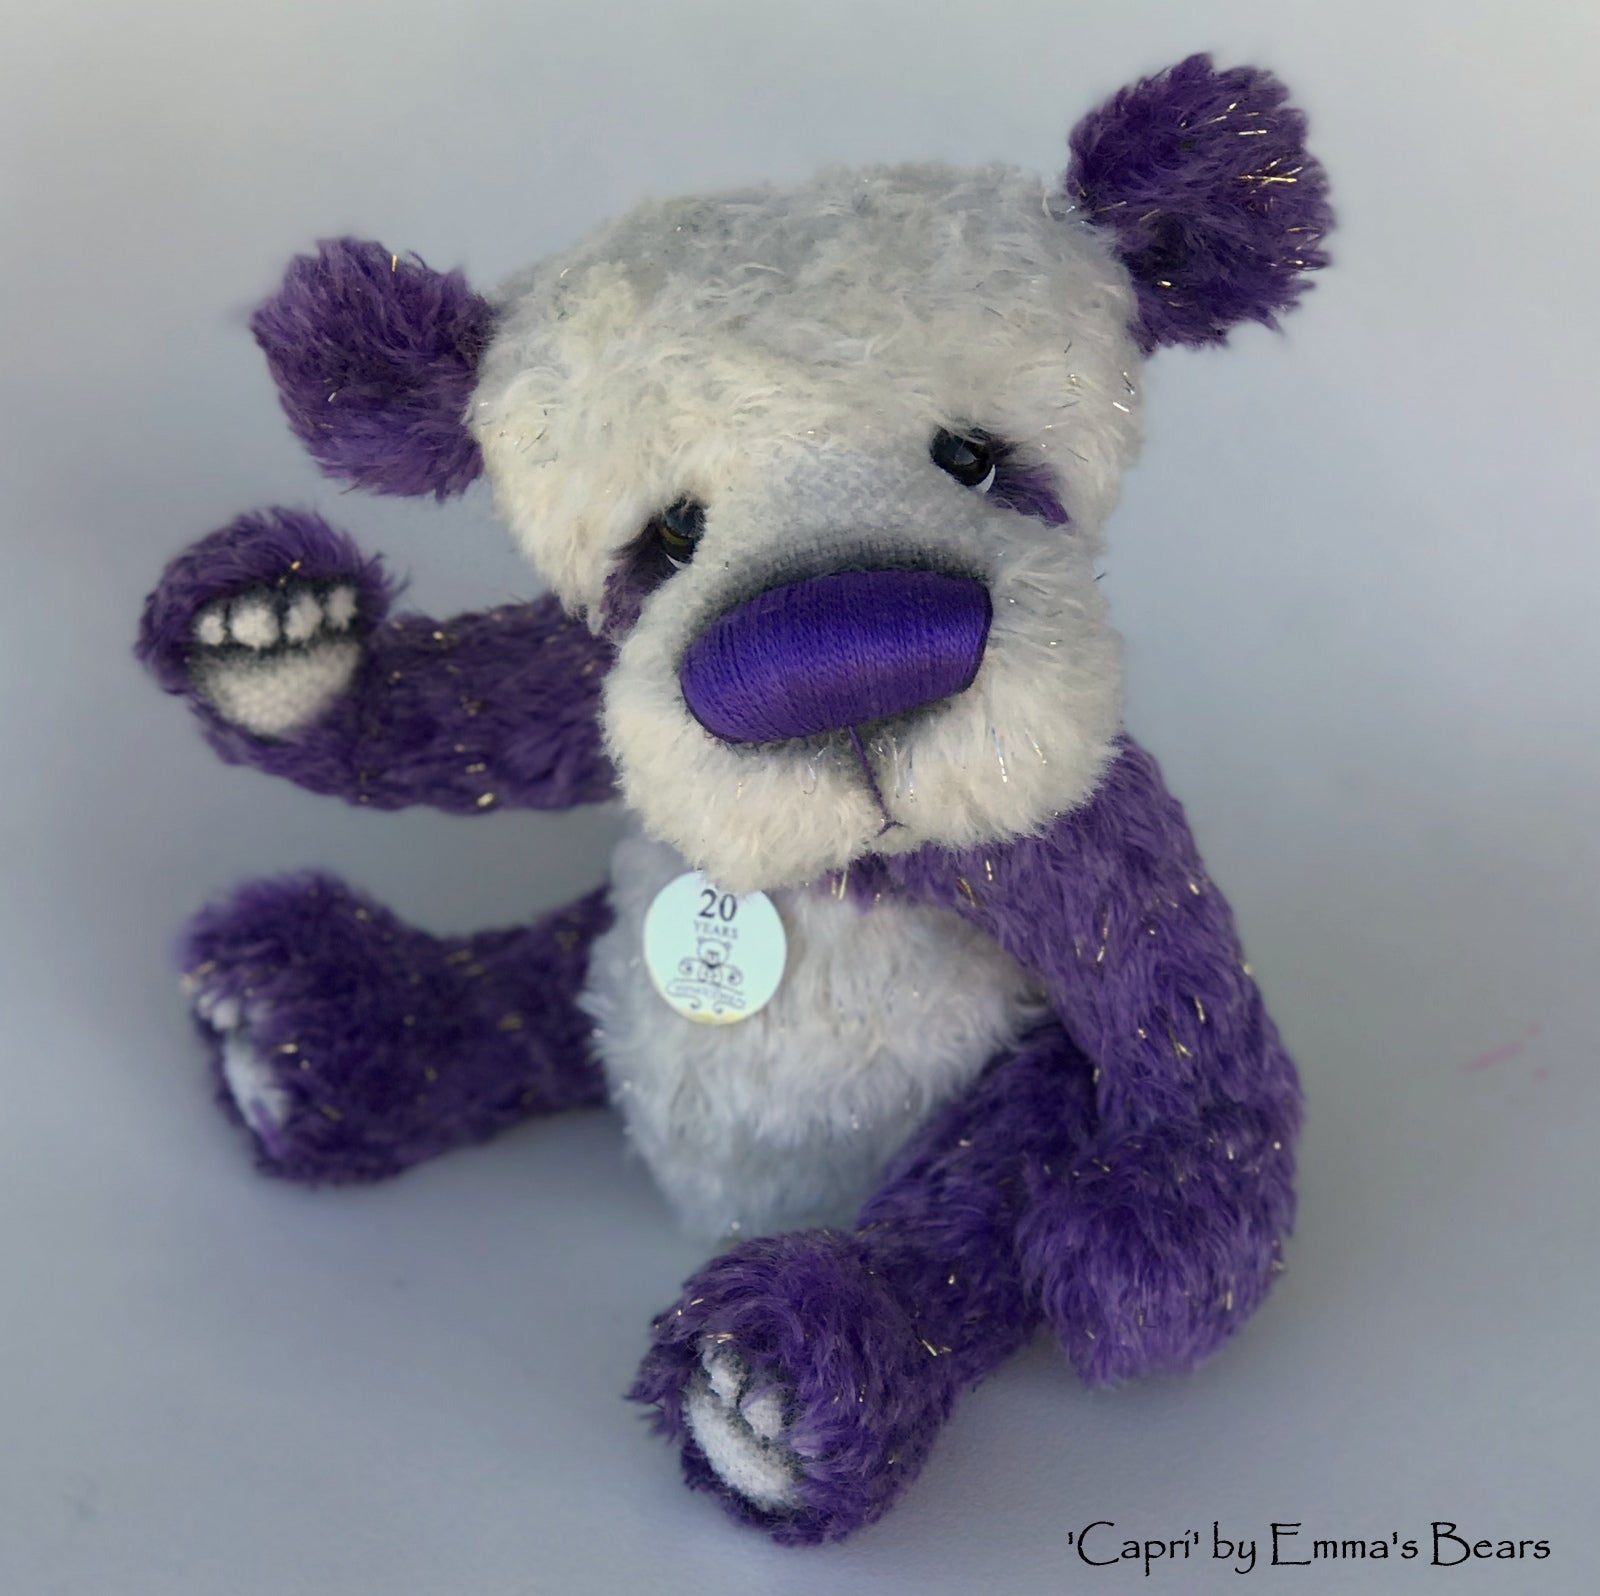 Capri - 20 Years of Emma's Bears Commemorative Teddy - OOAK in a series